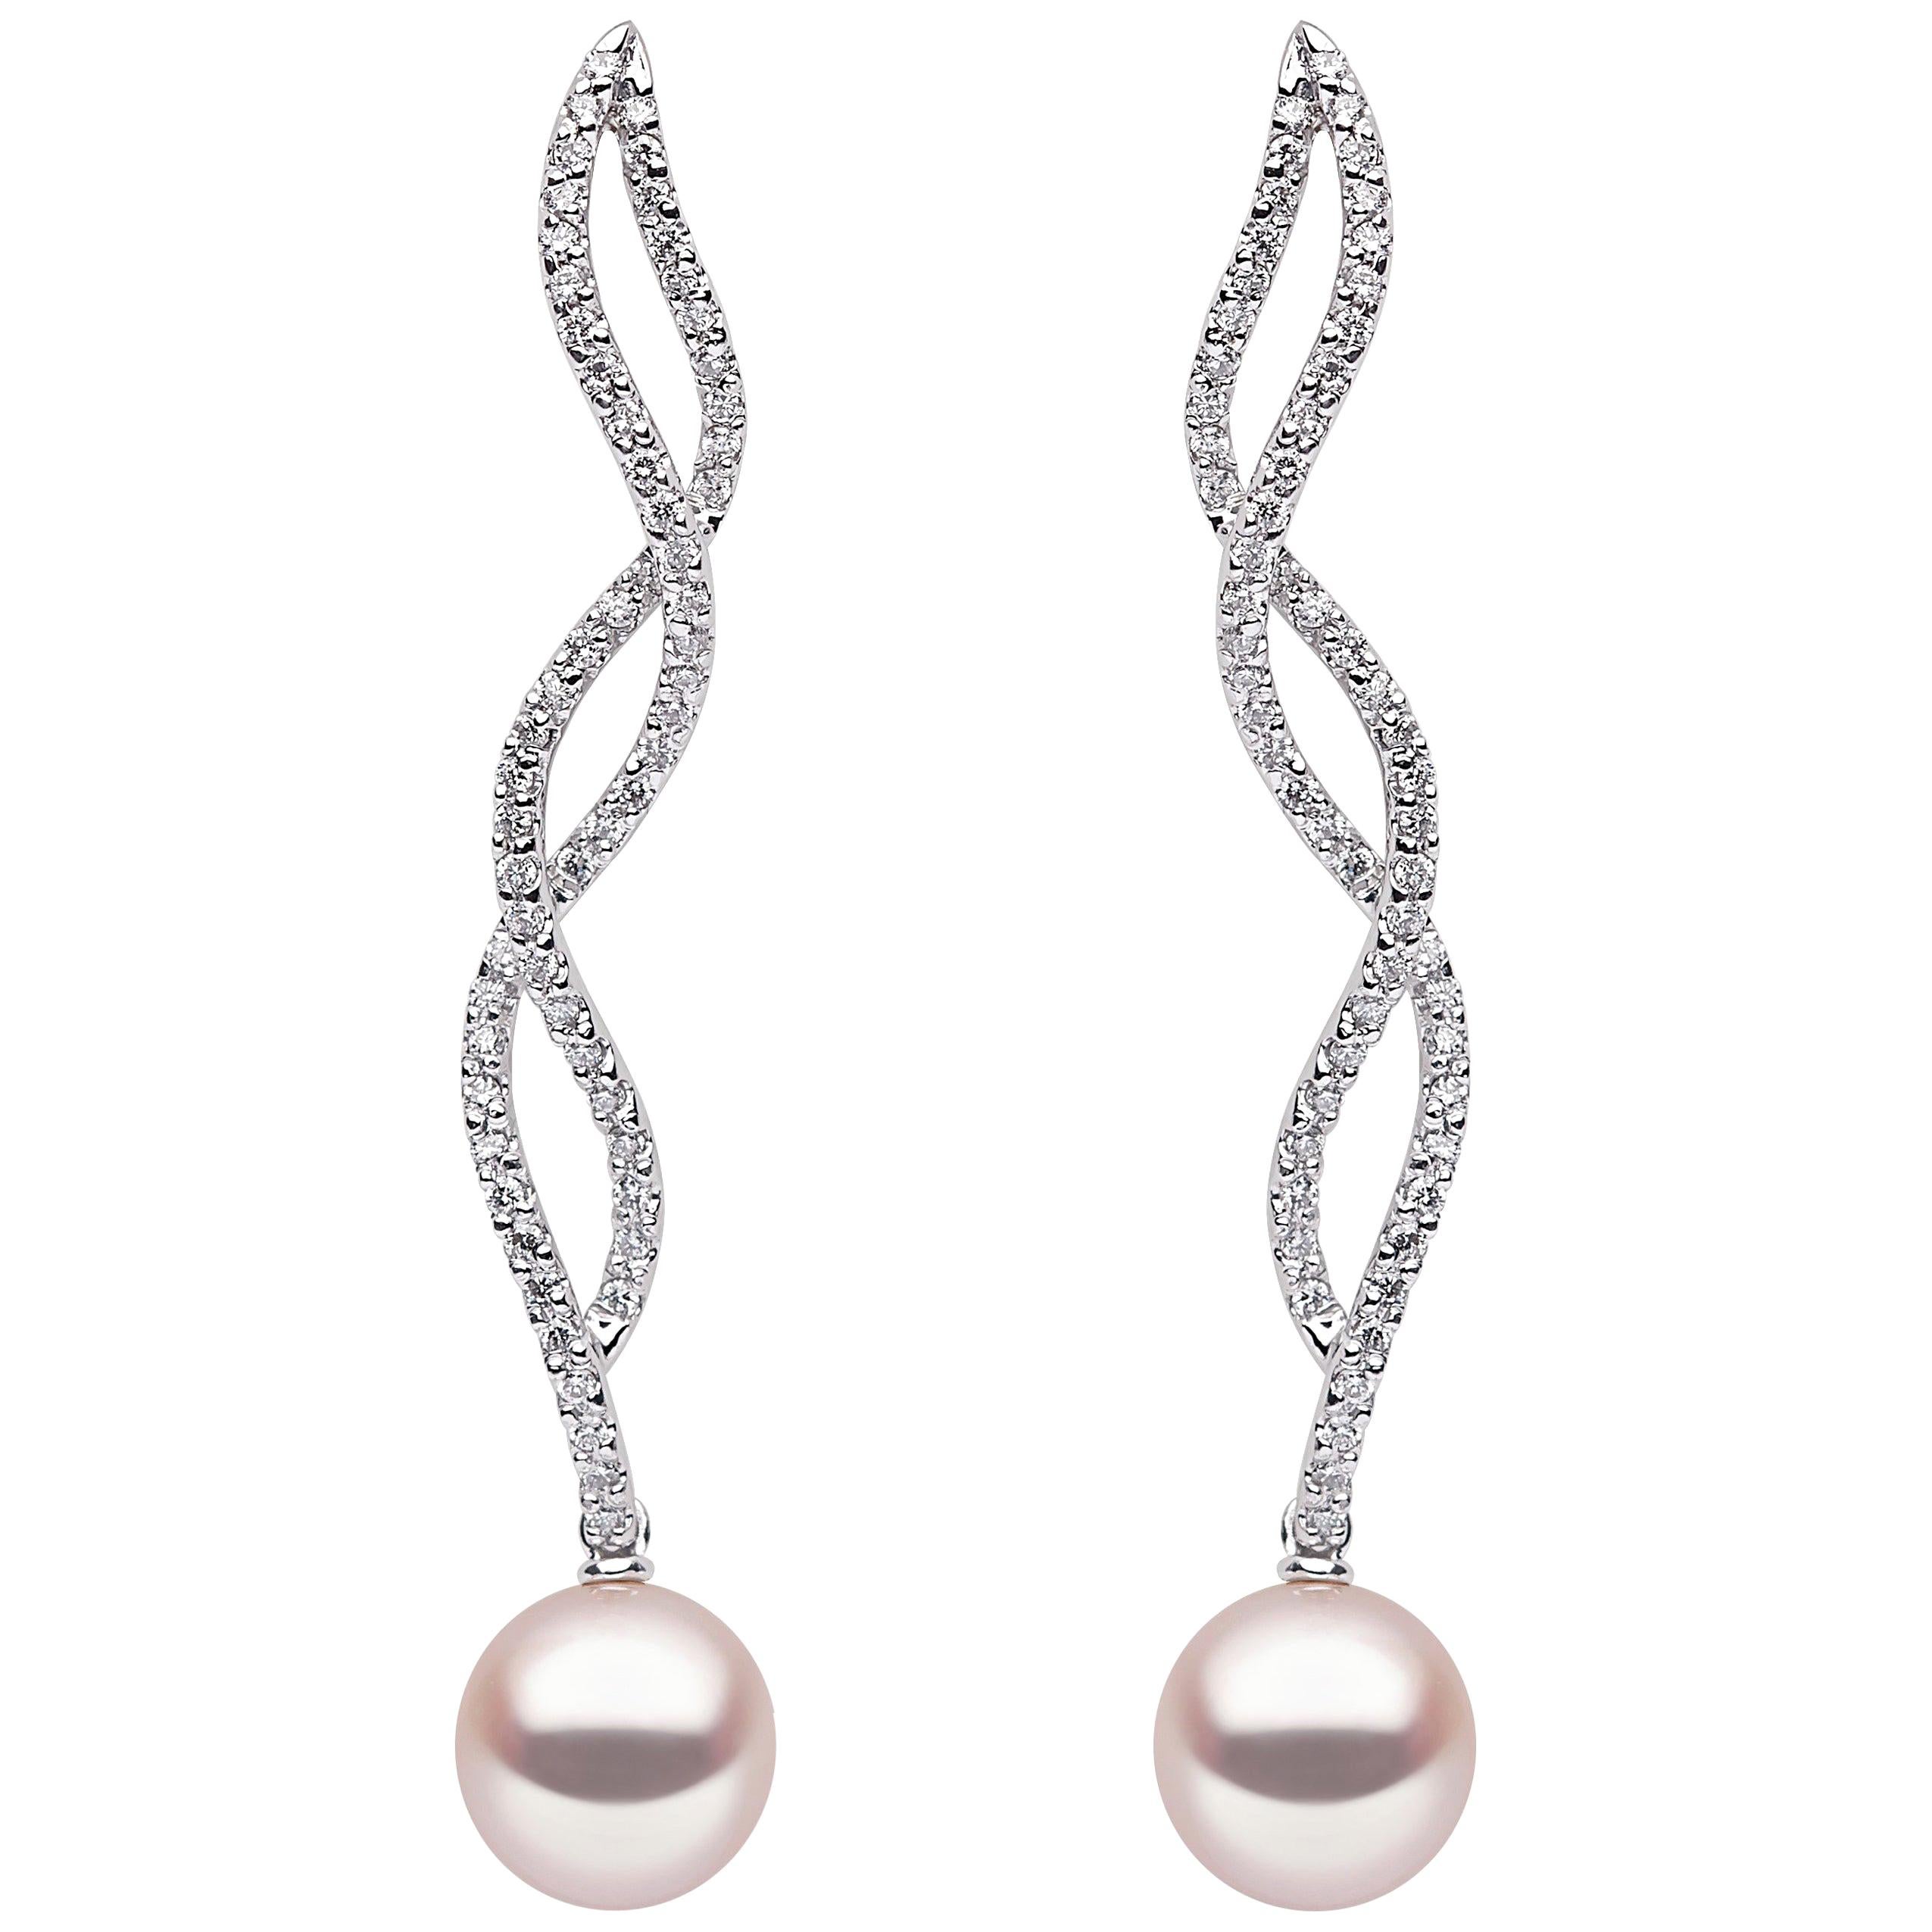 Yoko London Freshwater Pearl and Diamond Earrings, in 18 Karat White Gold